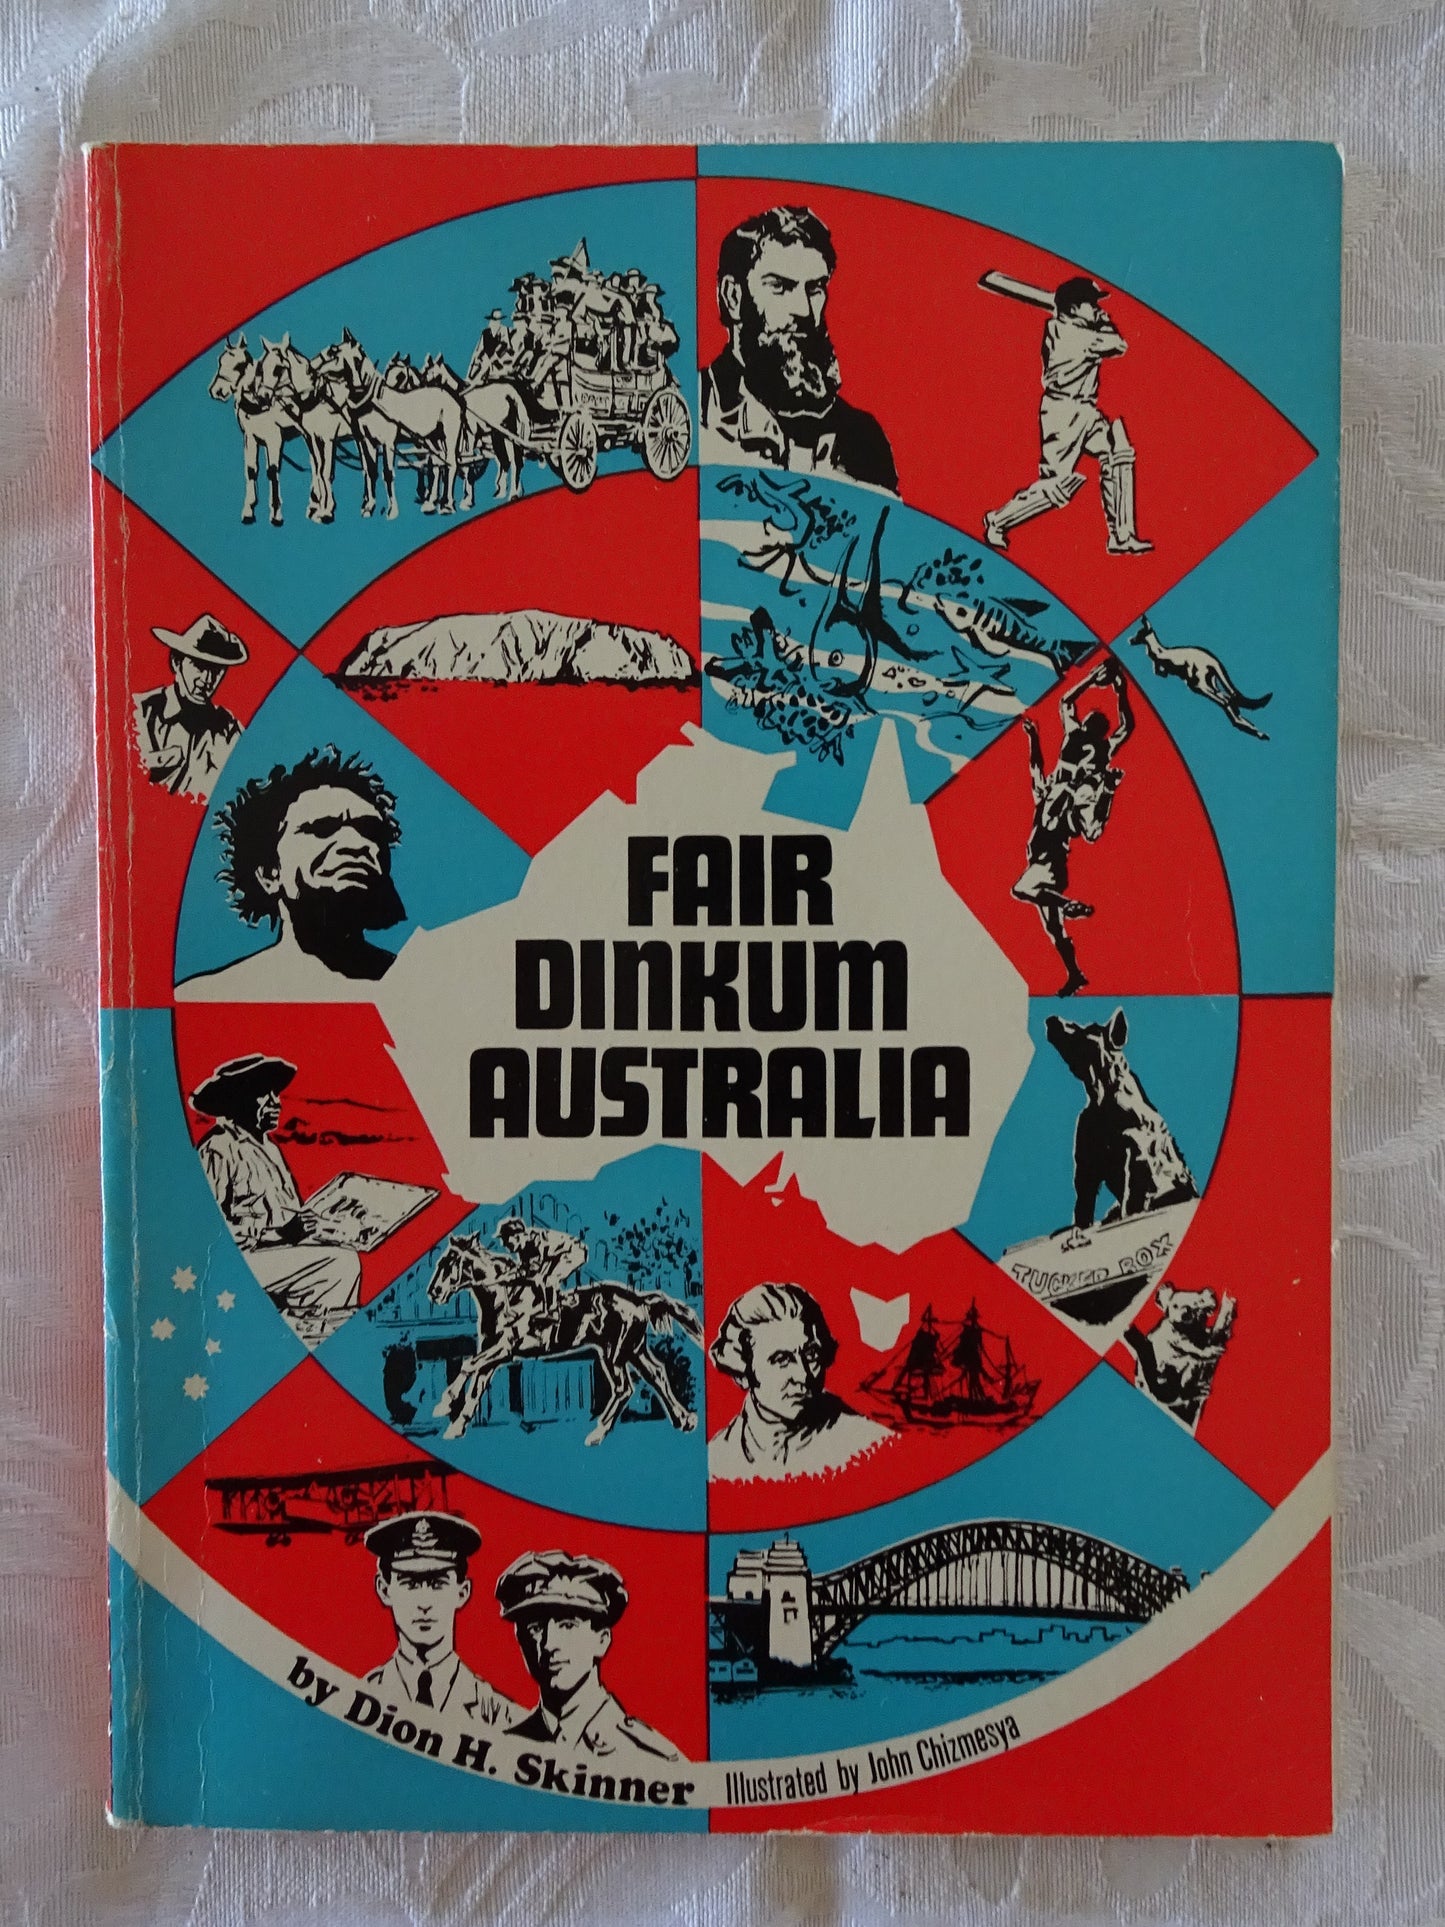 Fair Dinkum Australia by Dion H. Skinner